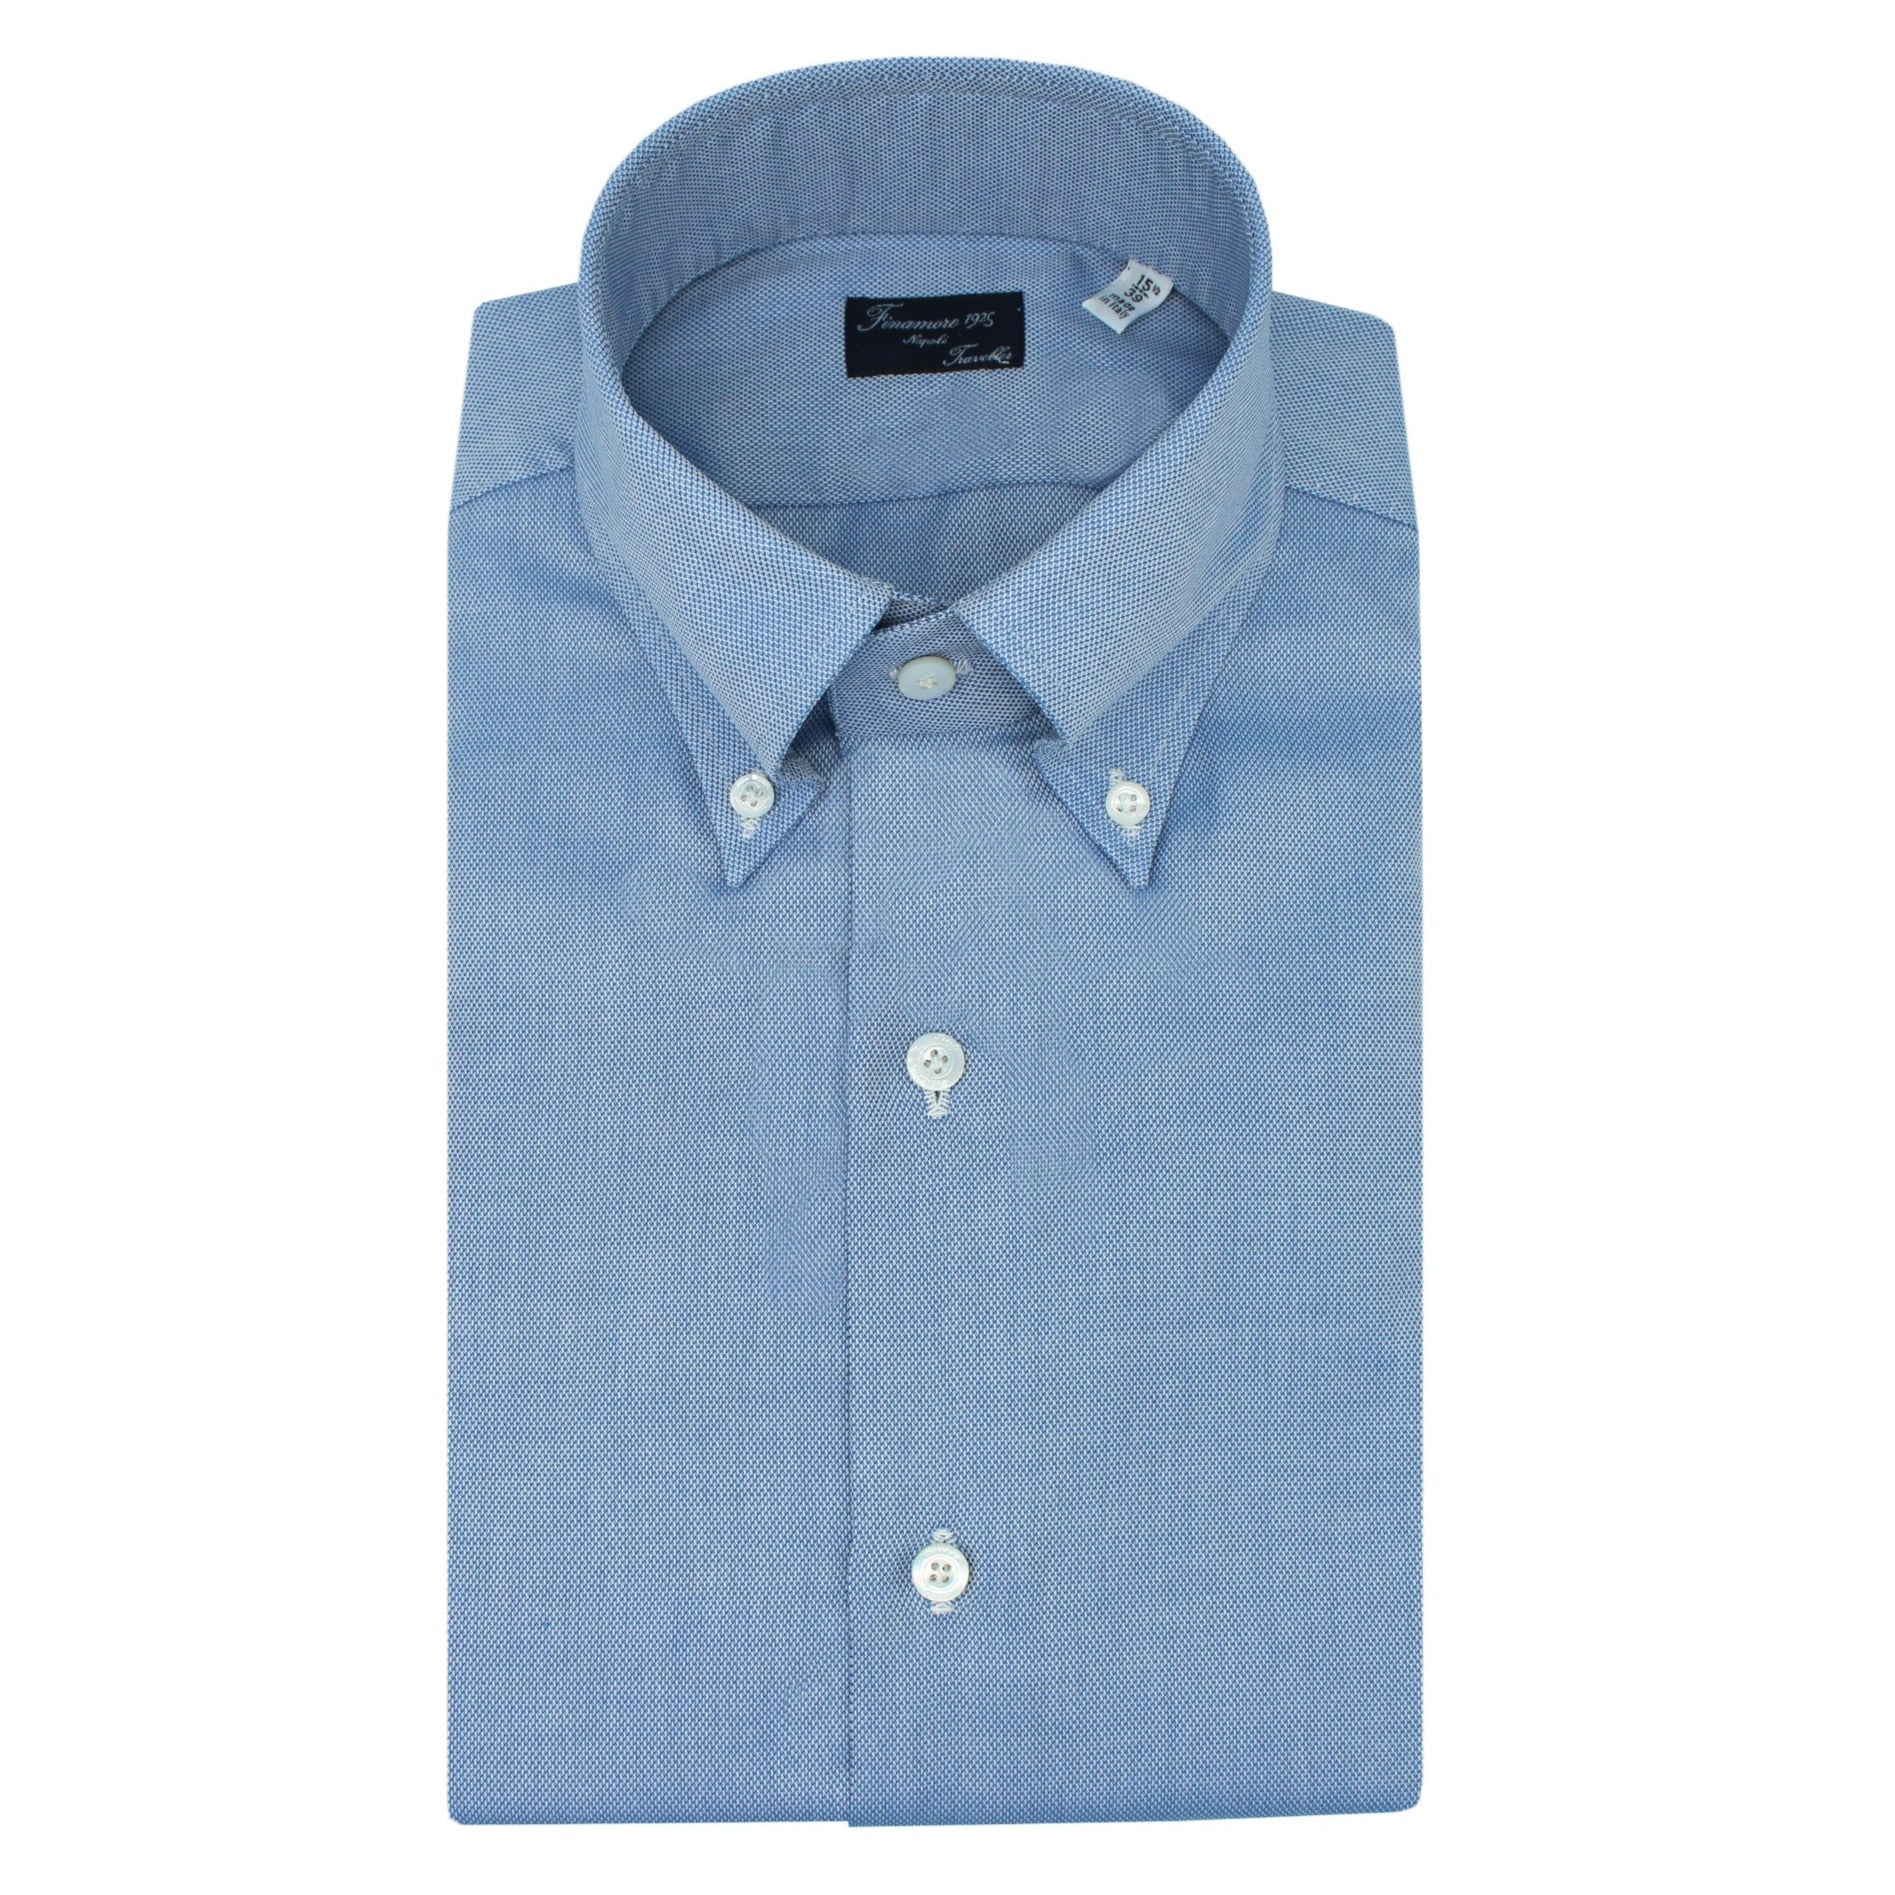 Classic Naples regular-fit cotton oxford blue shirt